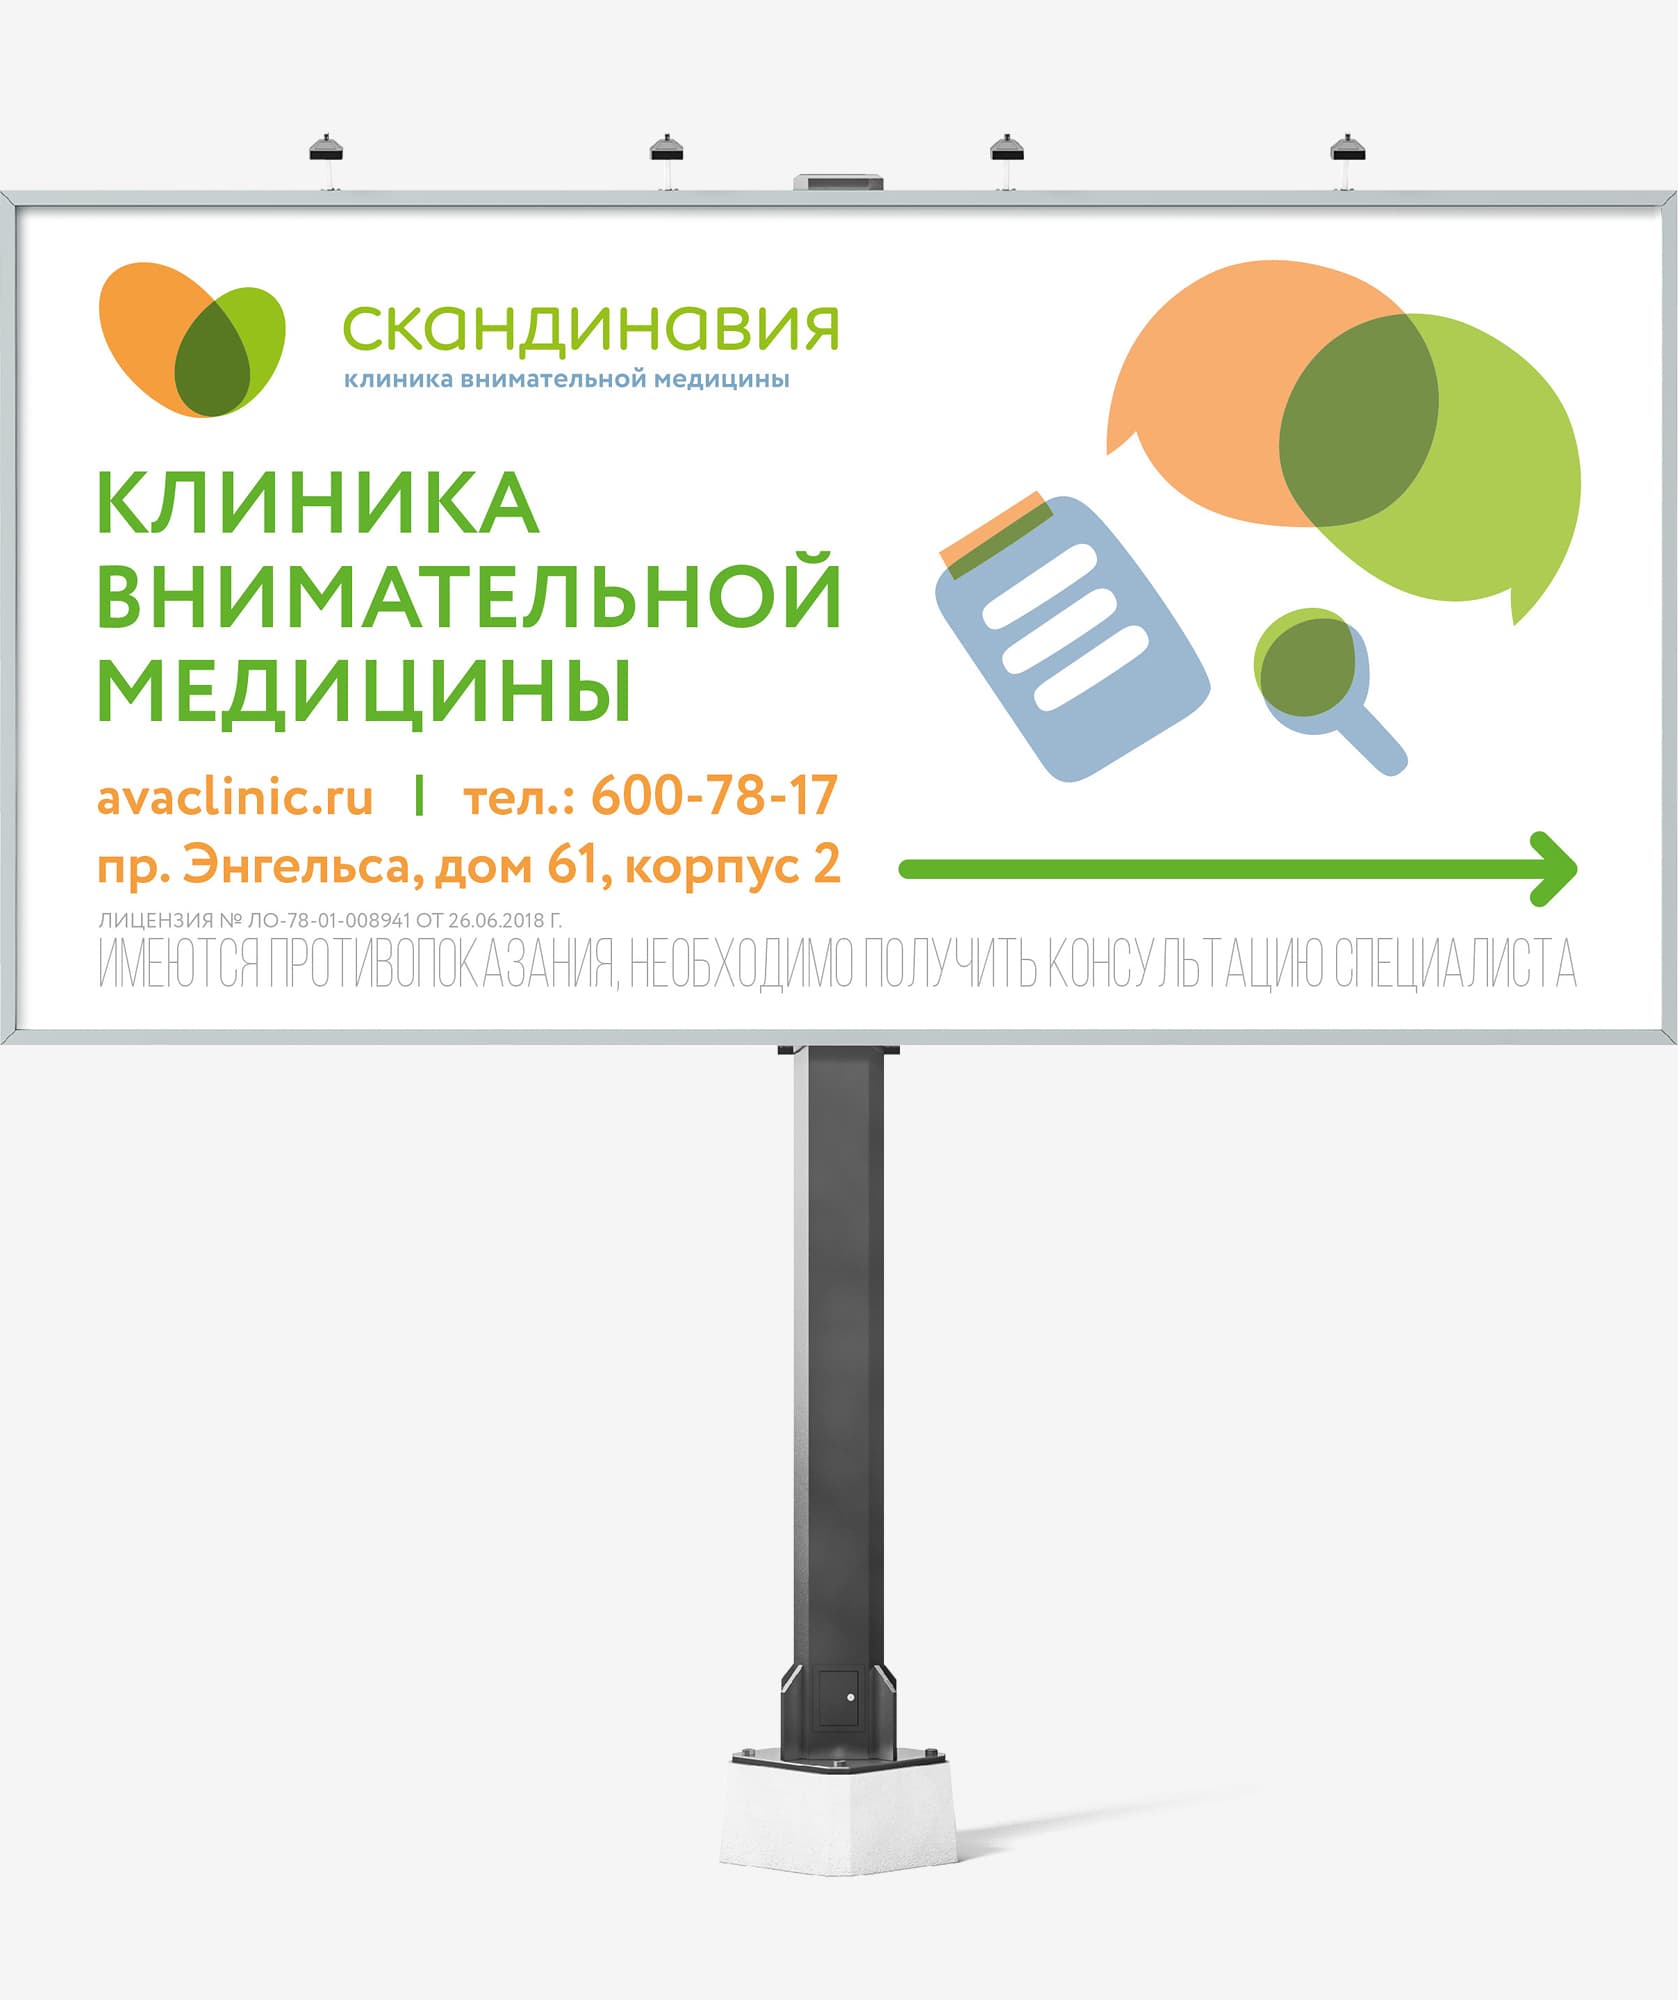 Дизайн билборда-указателя 6x3 метра для клиники «Скандинавия»